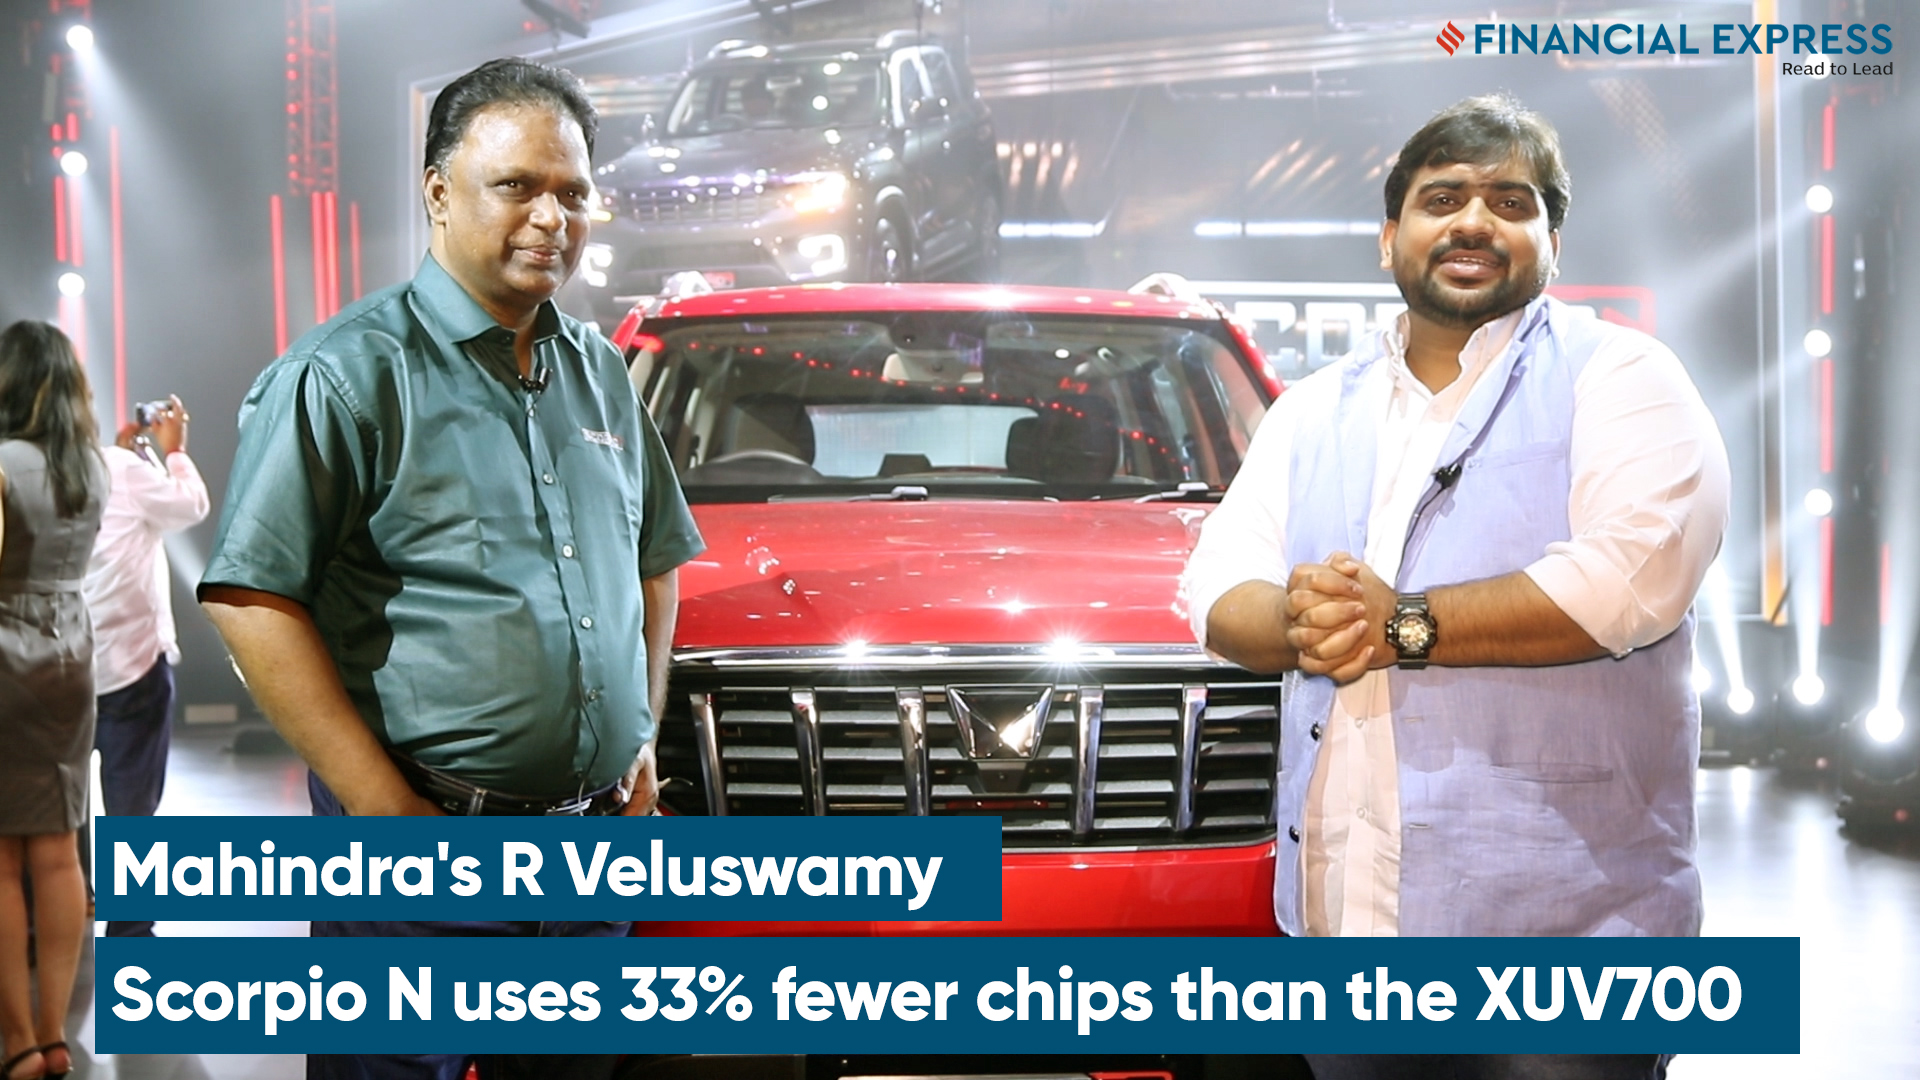 Mahindra’s R Veluswamy: Scorpio N uses 33% fewer chips than the XUV700.